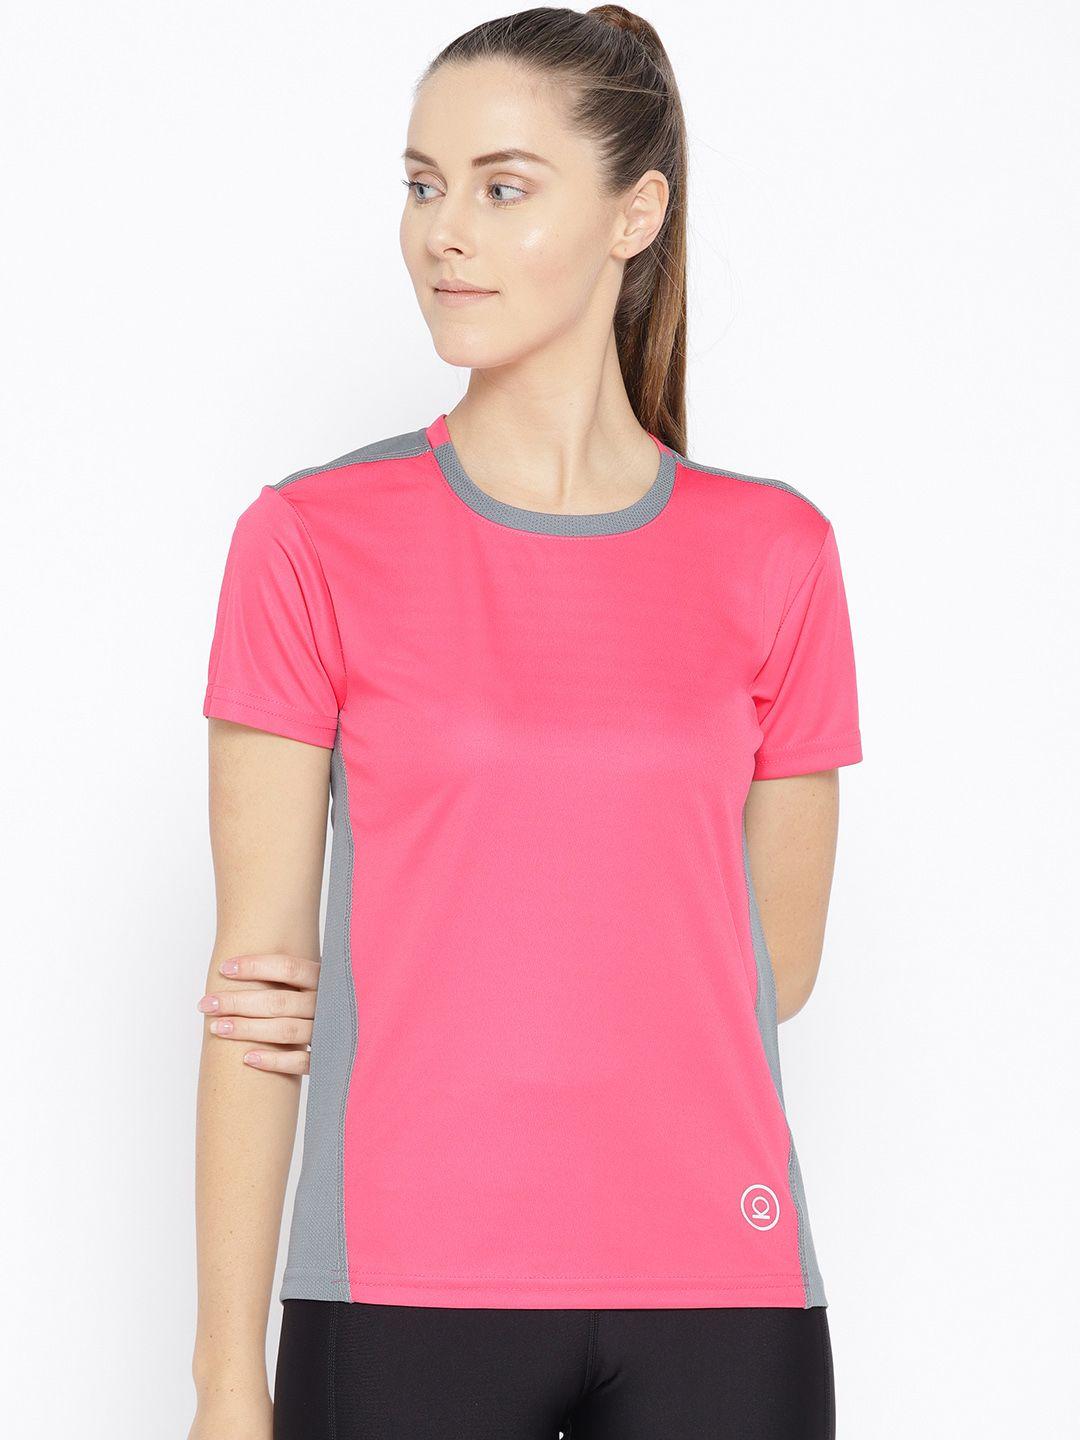 chkokko-women-pink-solid-round-neck-running-t-shirt